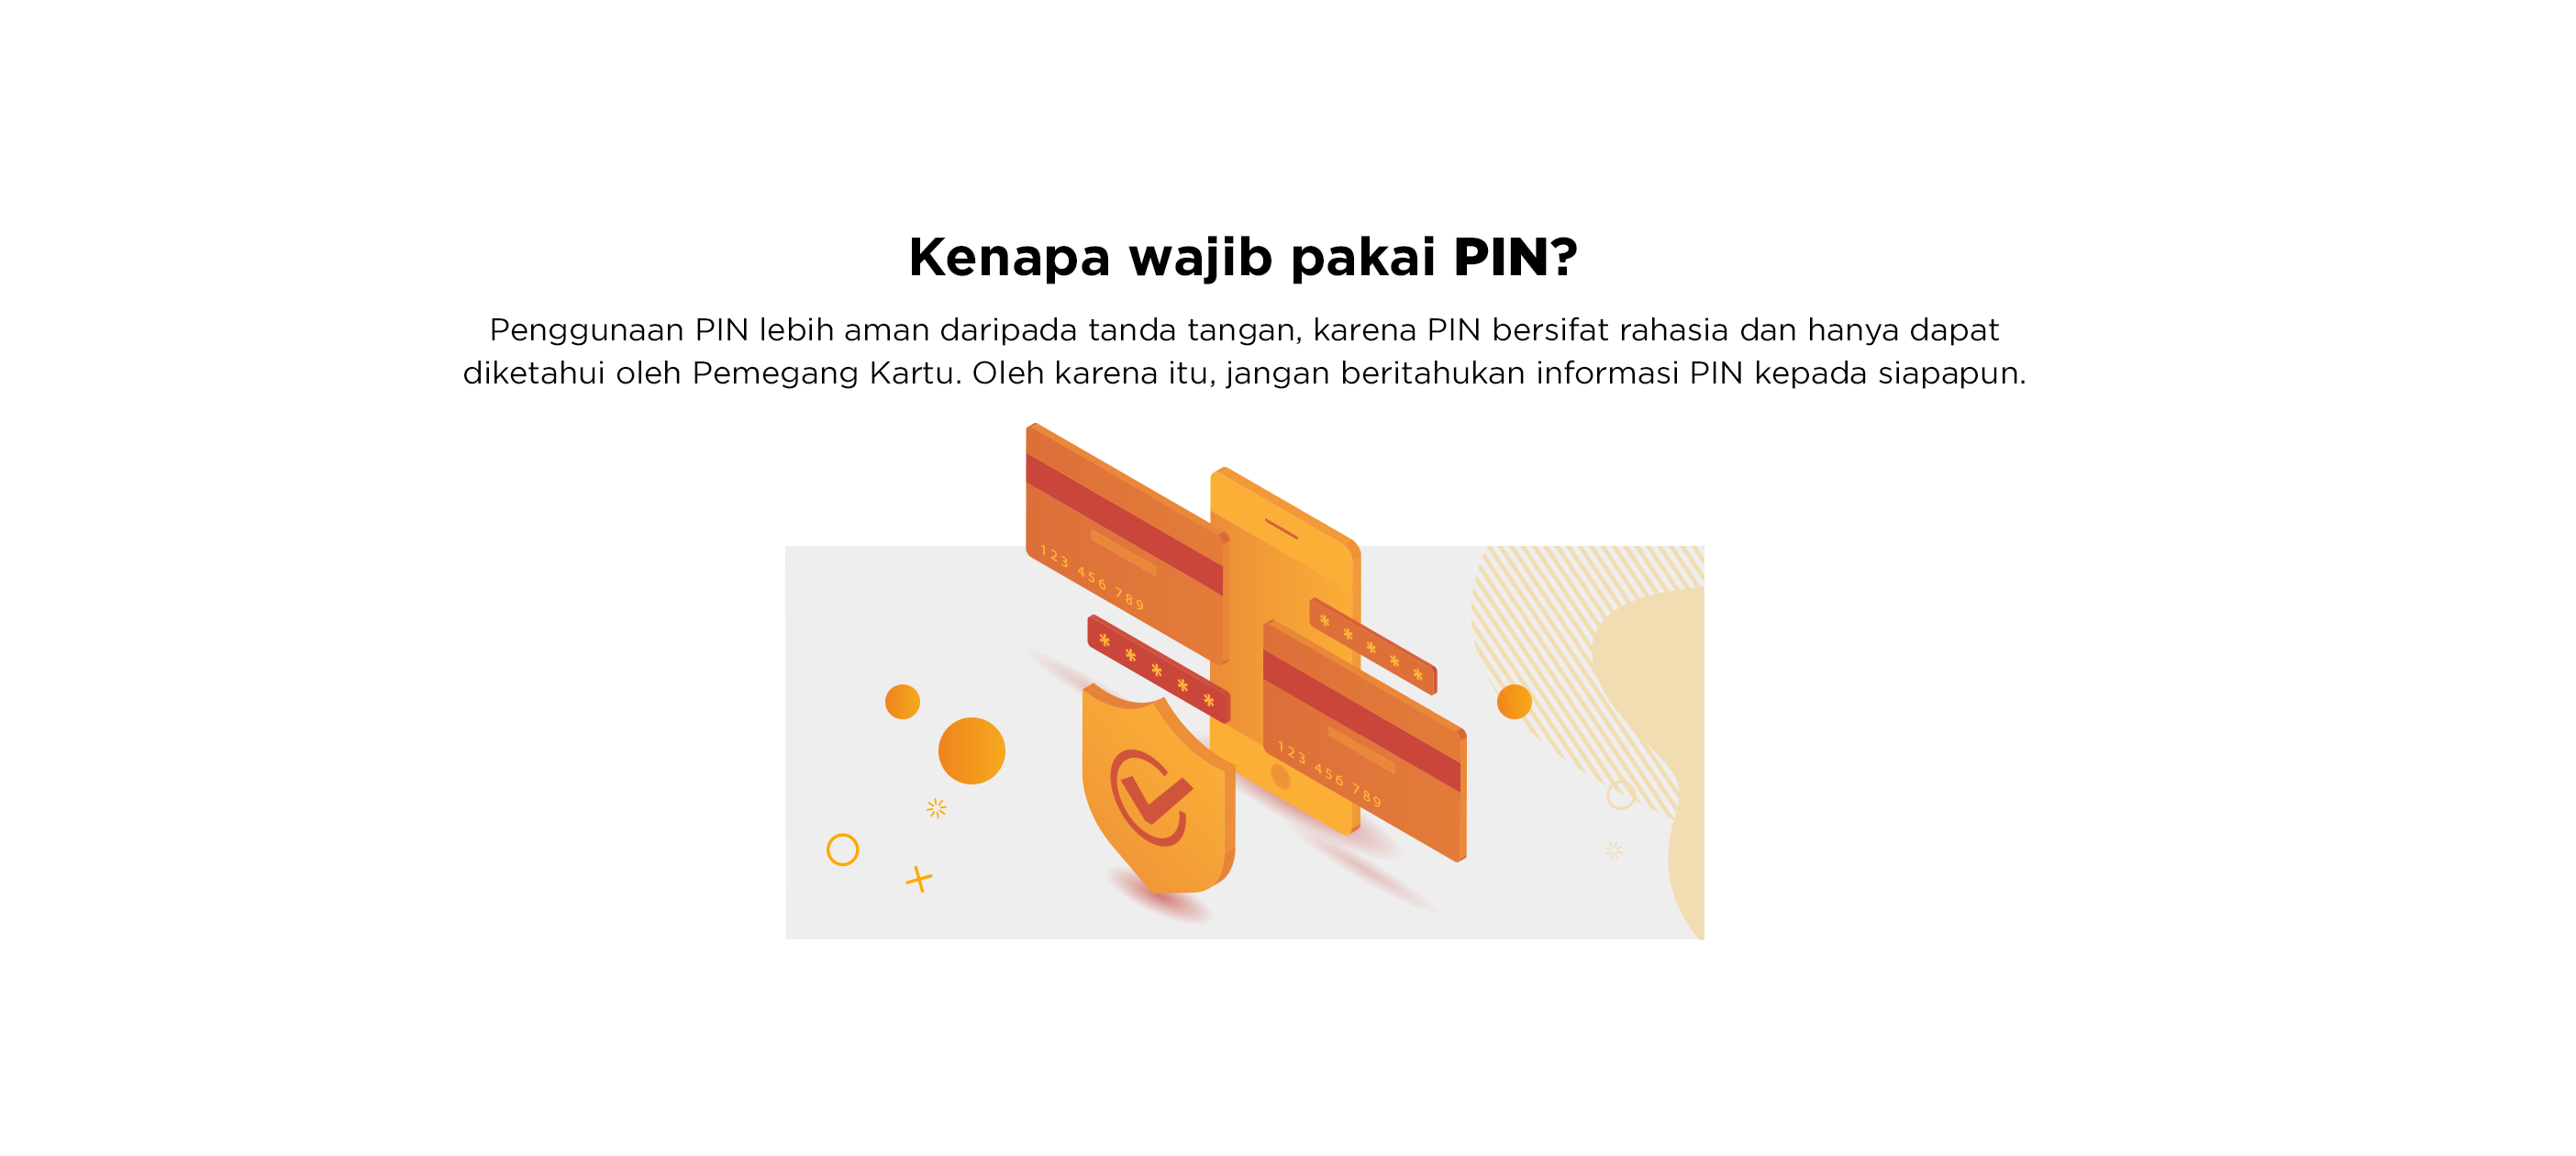 Buat/Ubah PIN via Aplikasi digibank by DBS / Internet Banking digibank